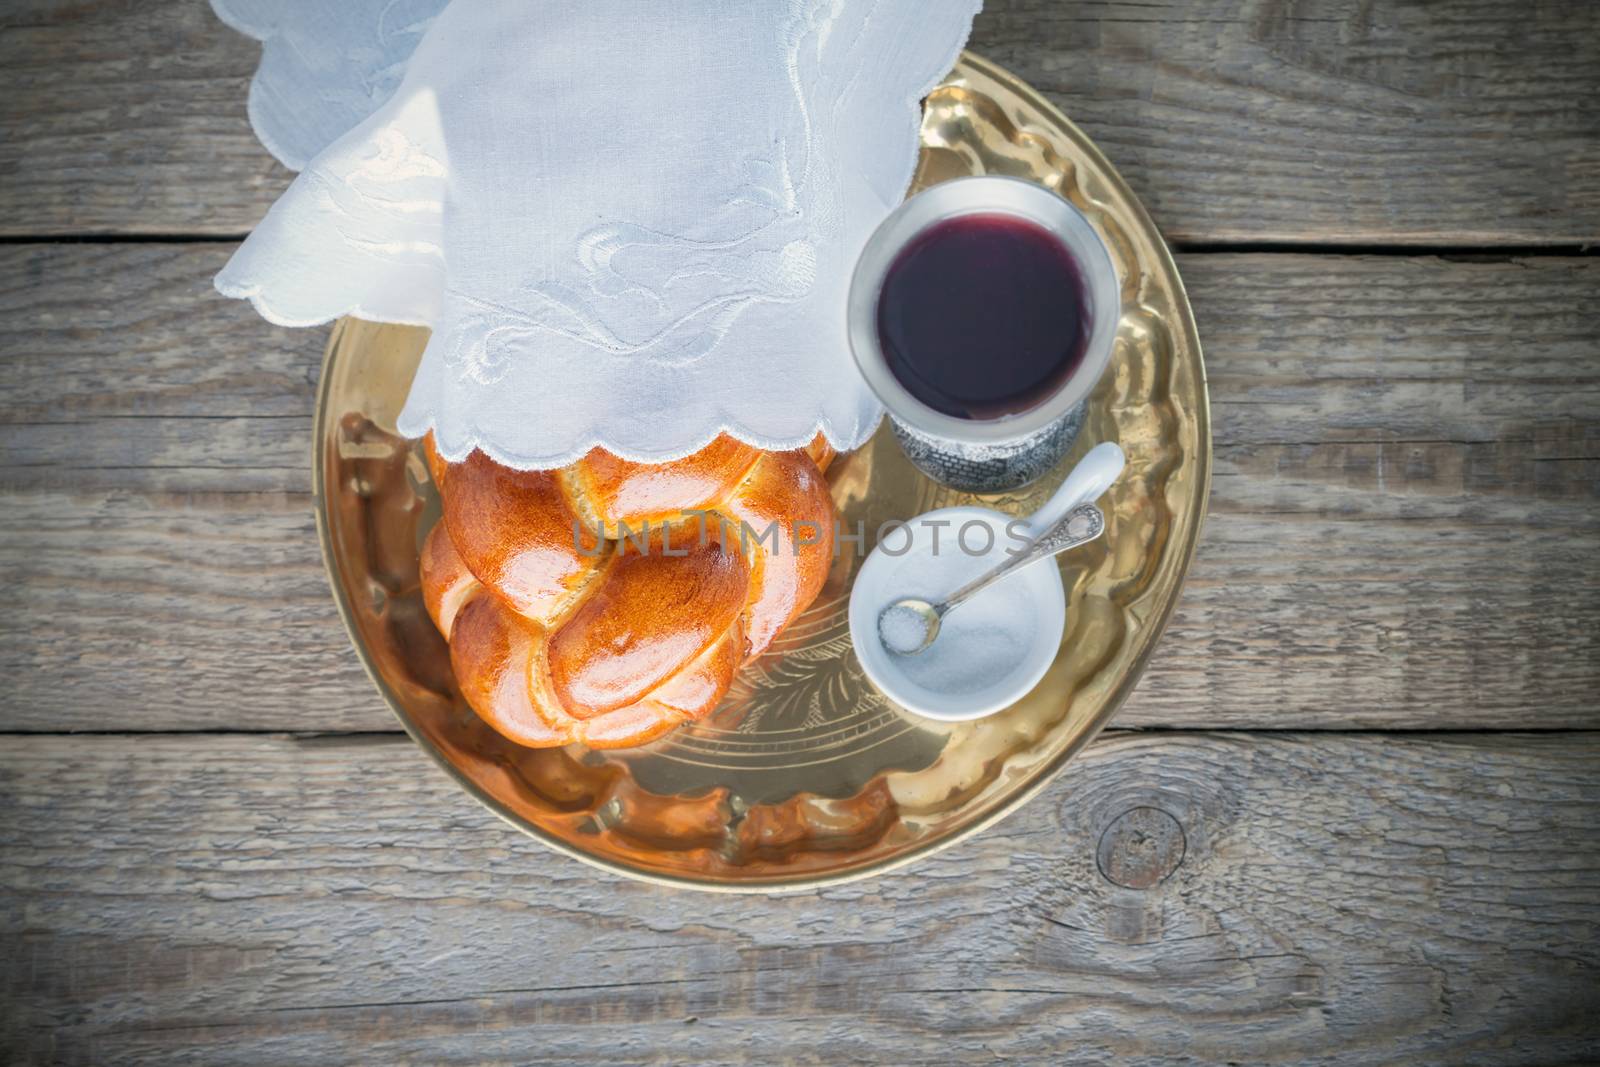 Wine, challah on a wooden surface. Jewish Sabbath